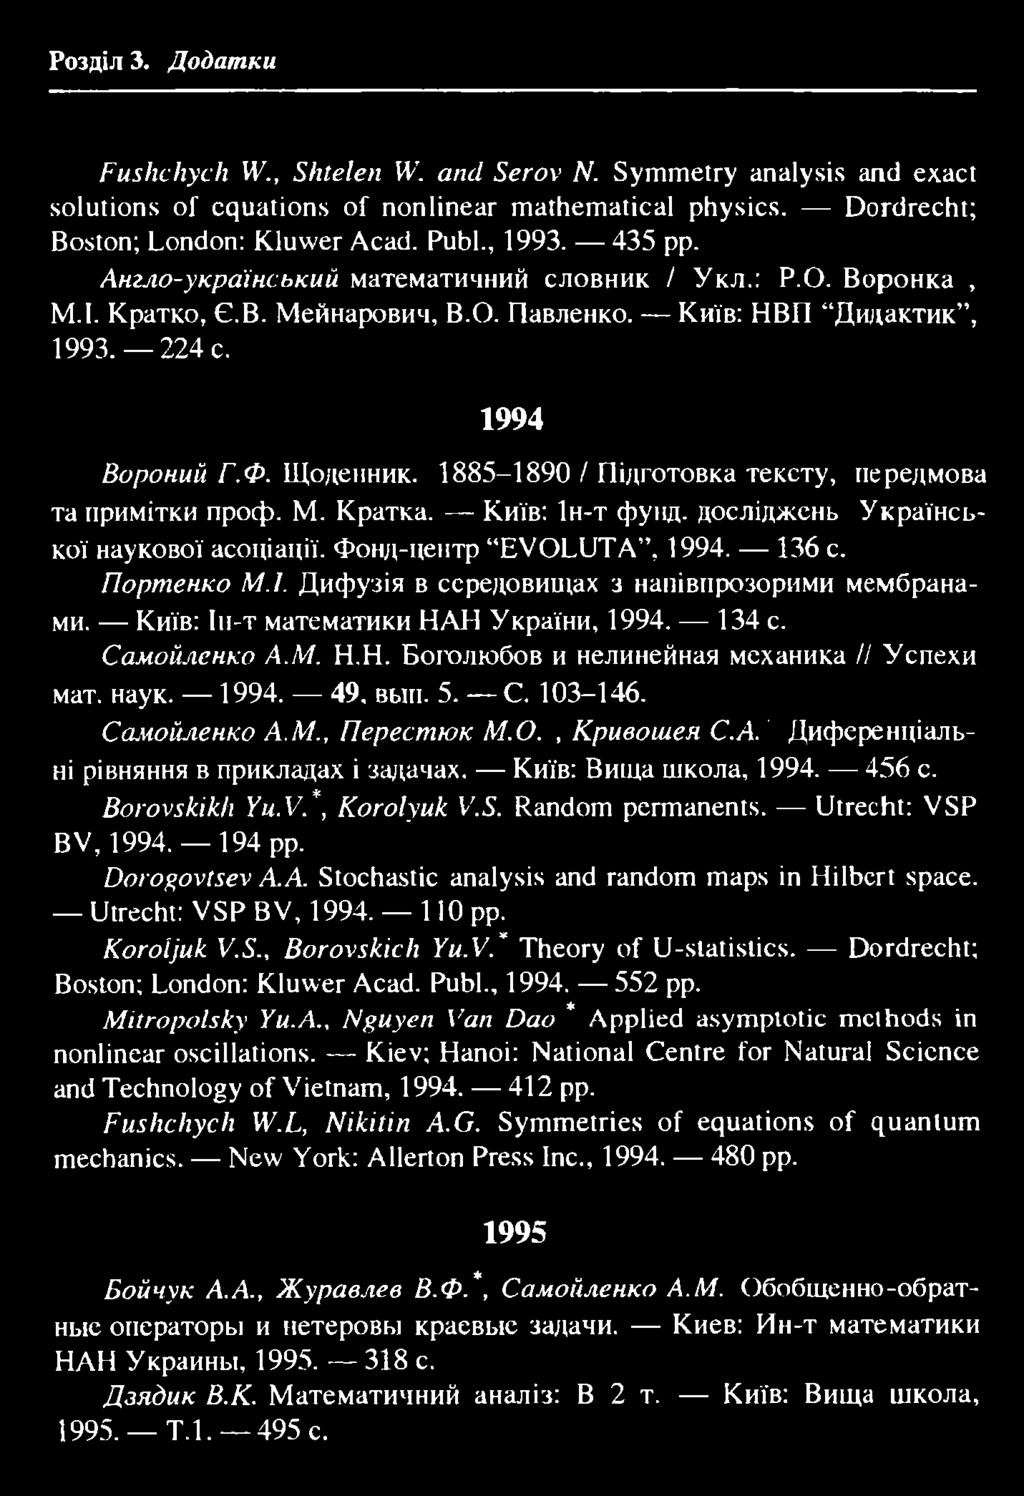 141 Розділ 3. Додатки Fushchych W., Shtelen W. and Serov N. Symmetry analysis and exact solutions of equations of nonlinear mathematical physics. Dordrecht; Boston; London: Kluwer Acad. Publ., 1993.